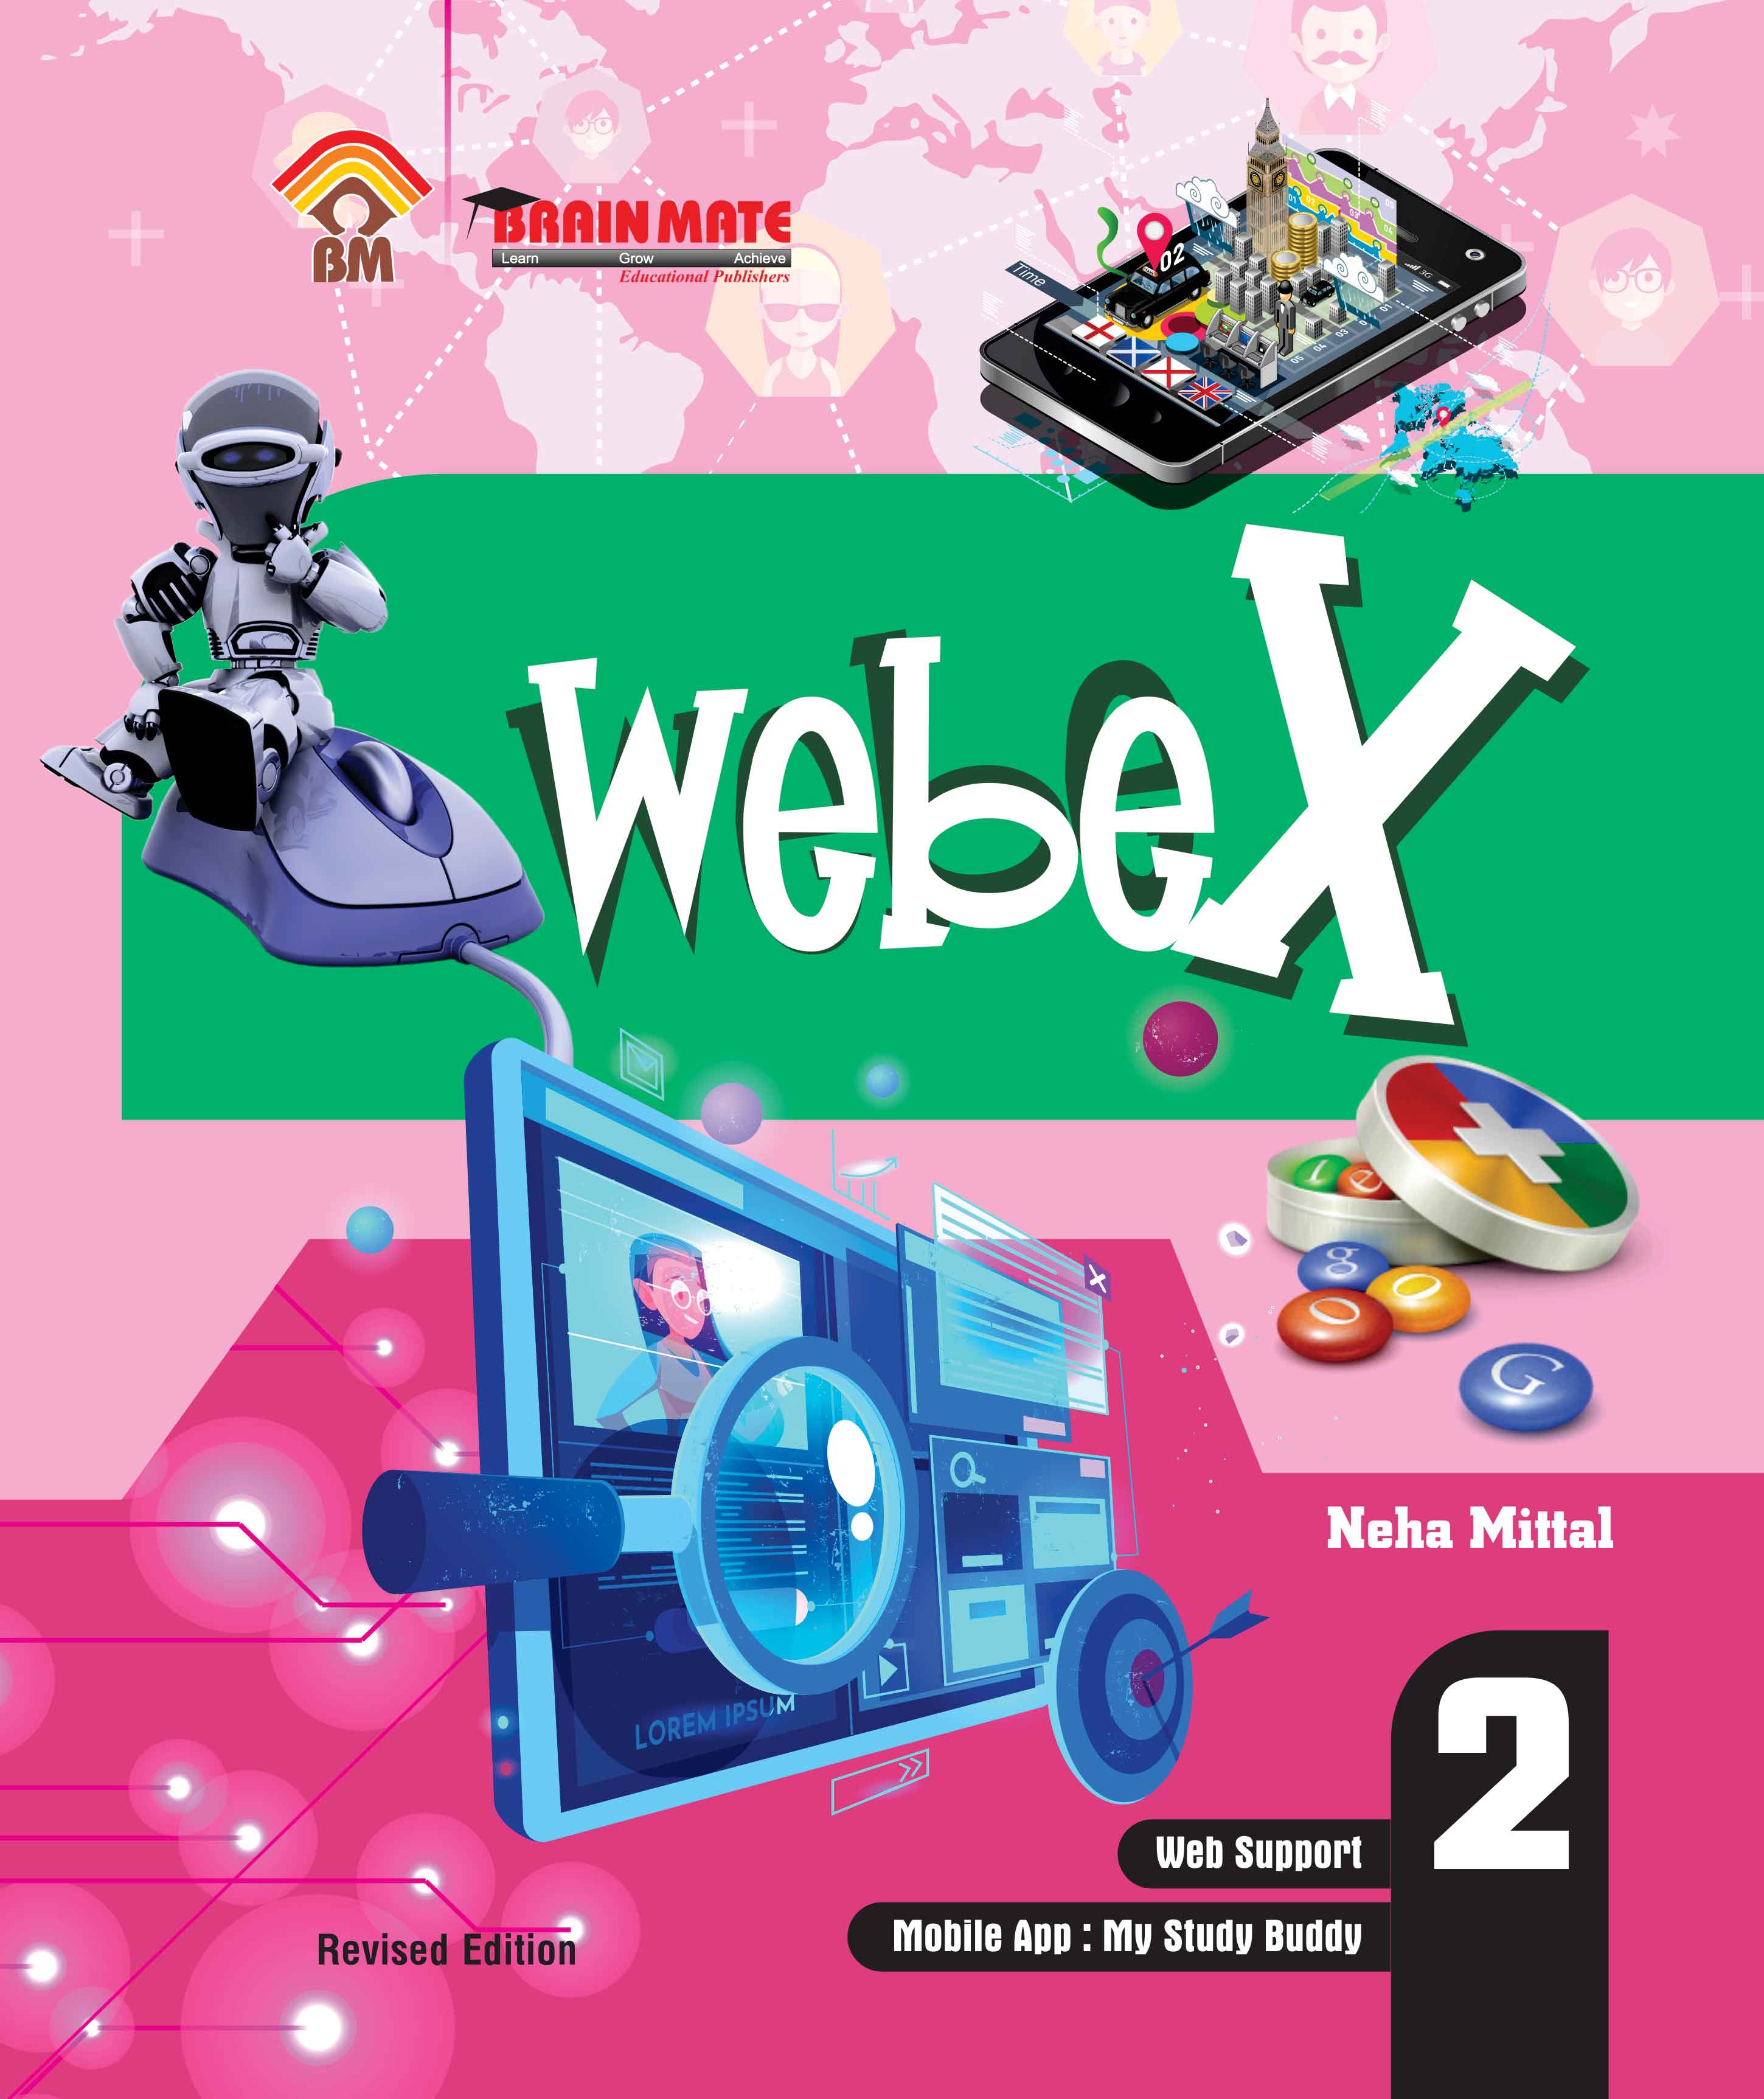 brainmate of Webex-2